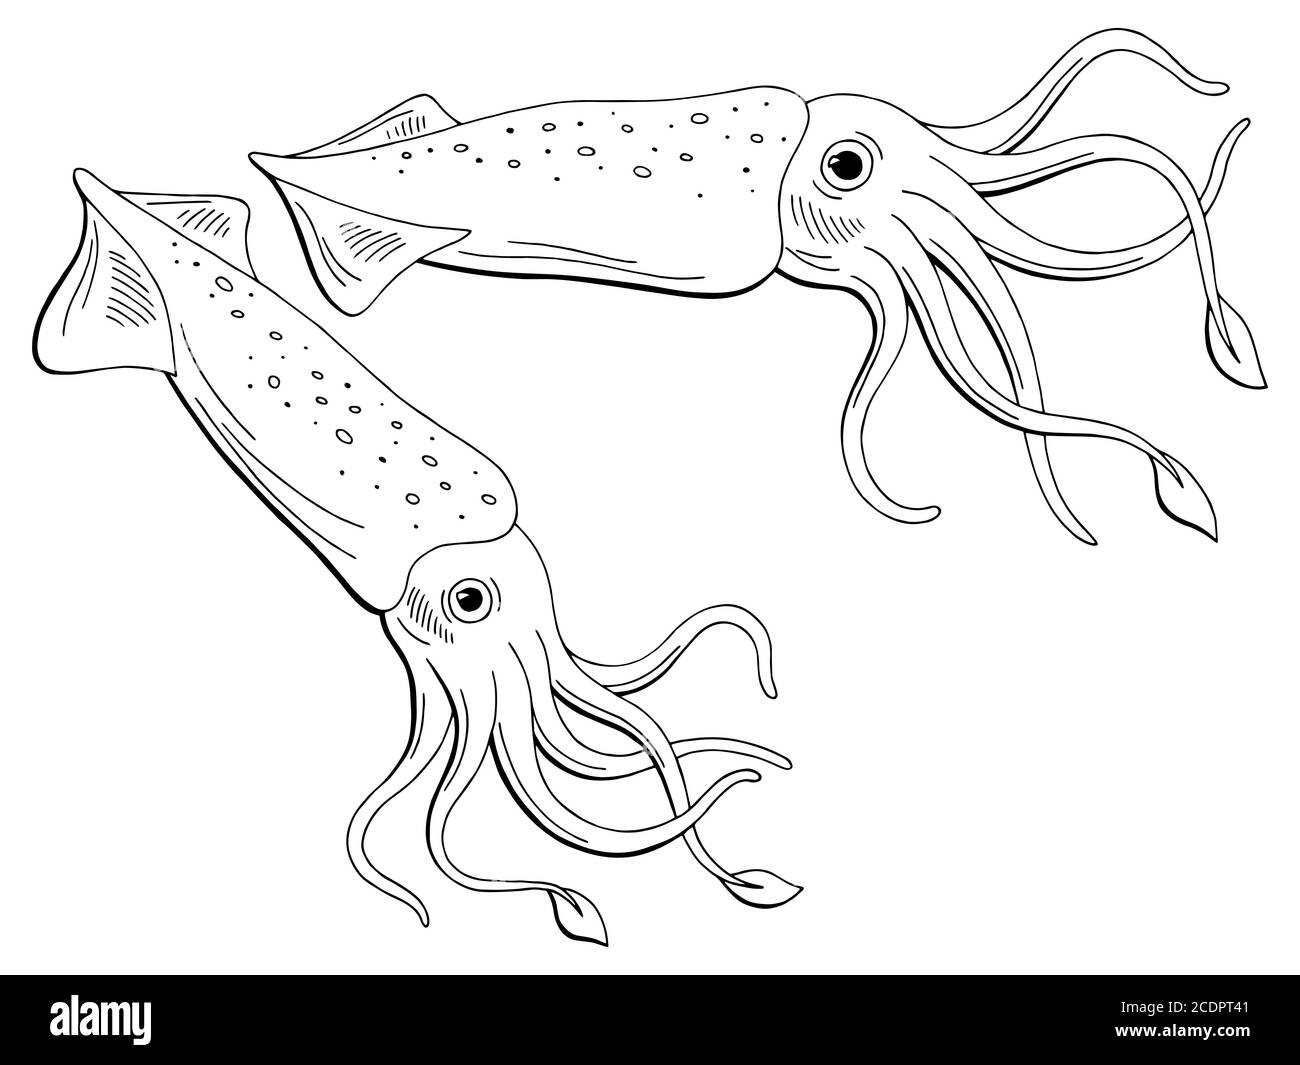 Squid calamari graphic black white isolated sketch illustration vector Stock Vector